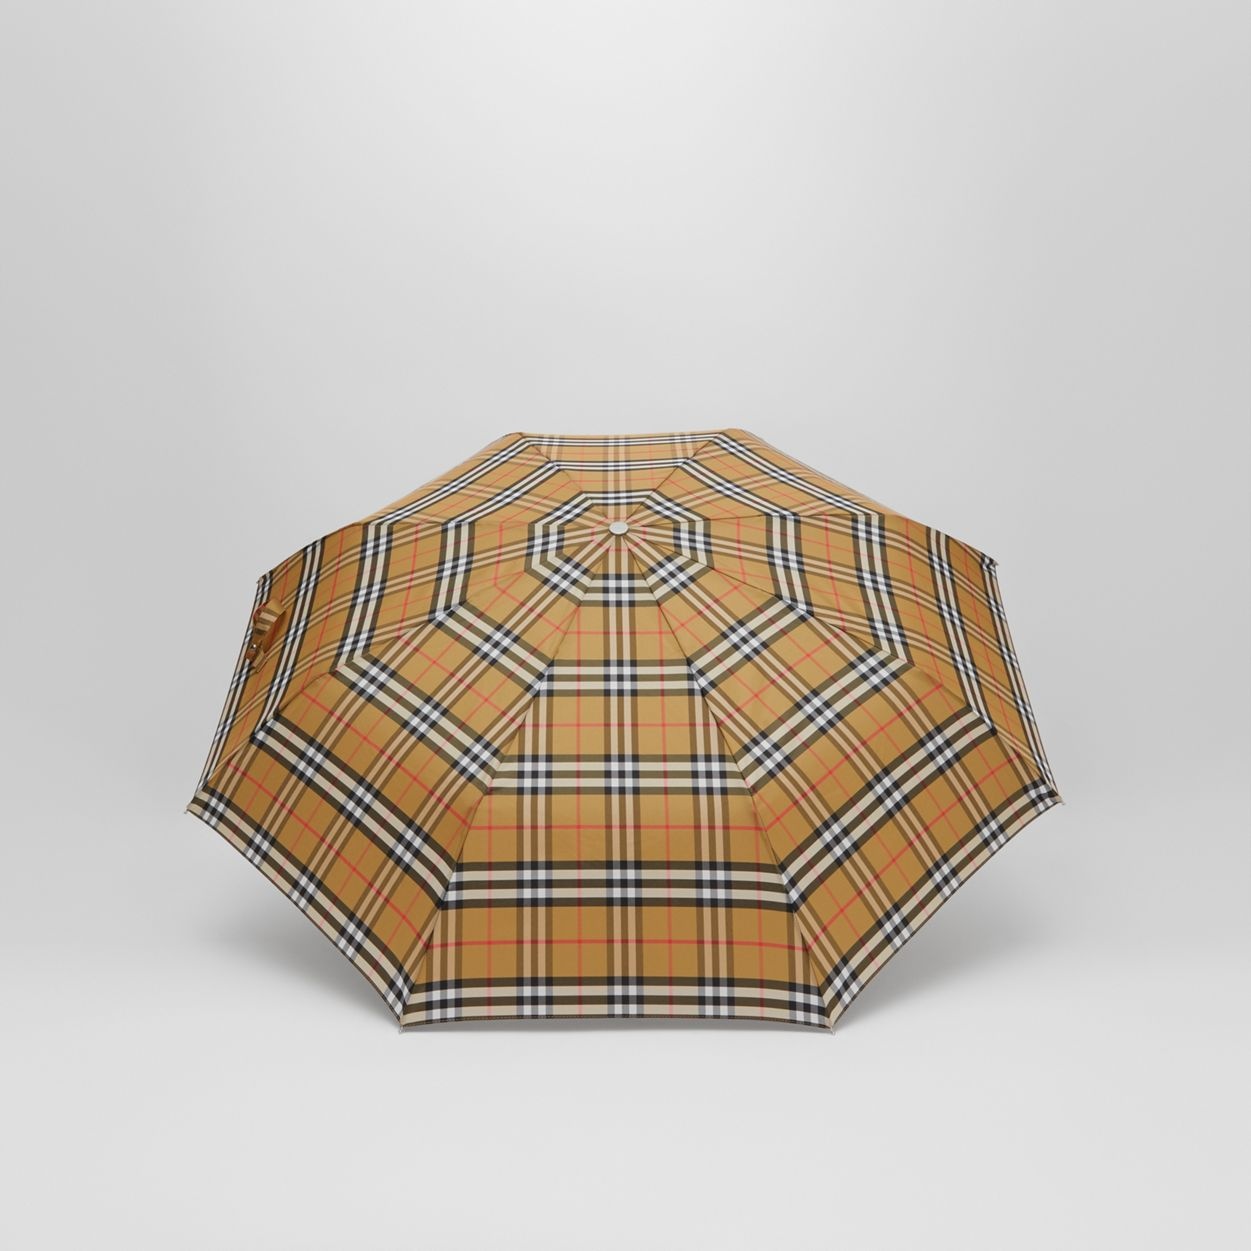 Vintage Check Folding Umbrella - 5